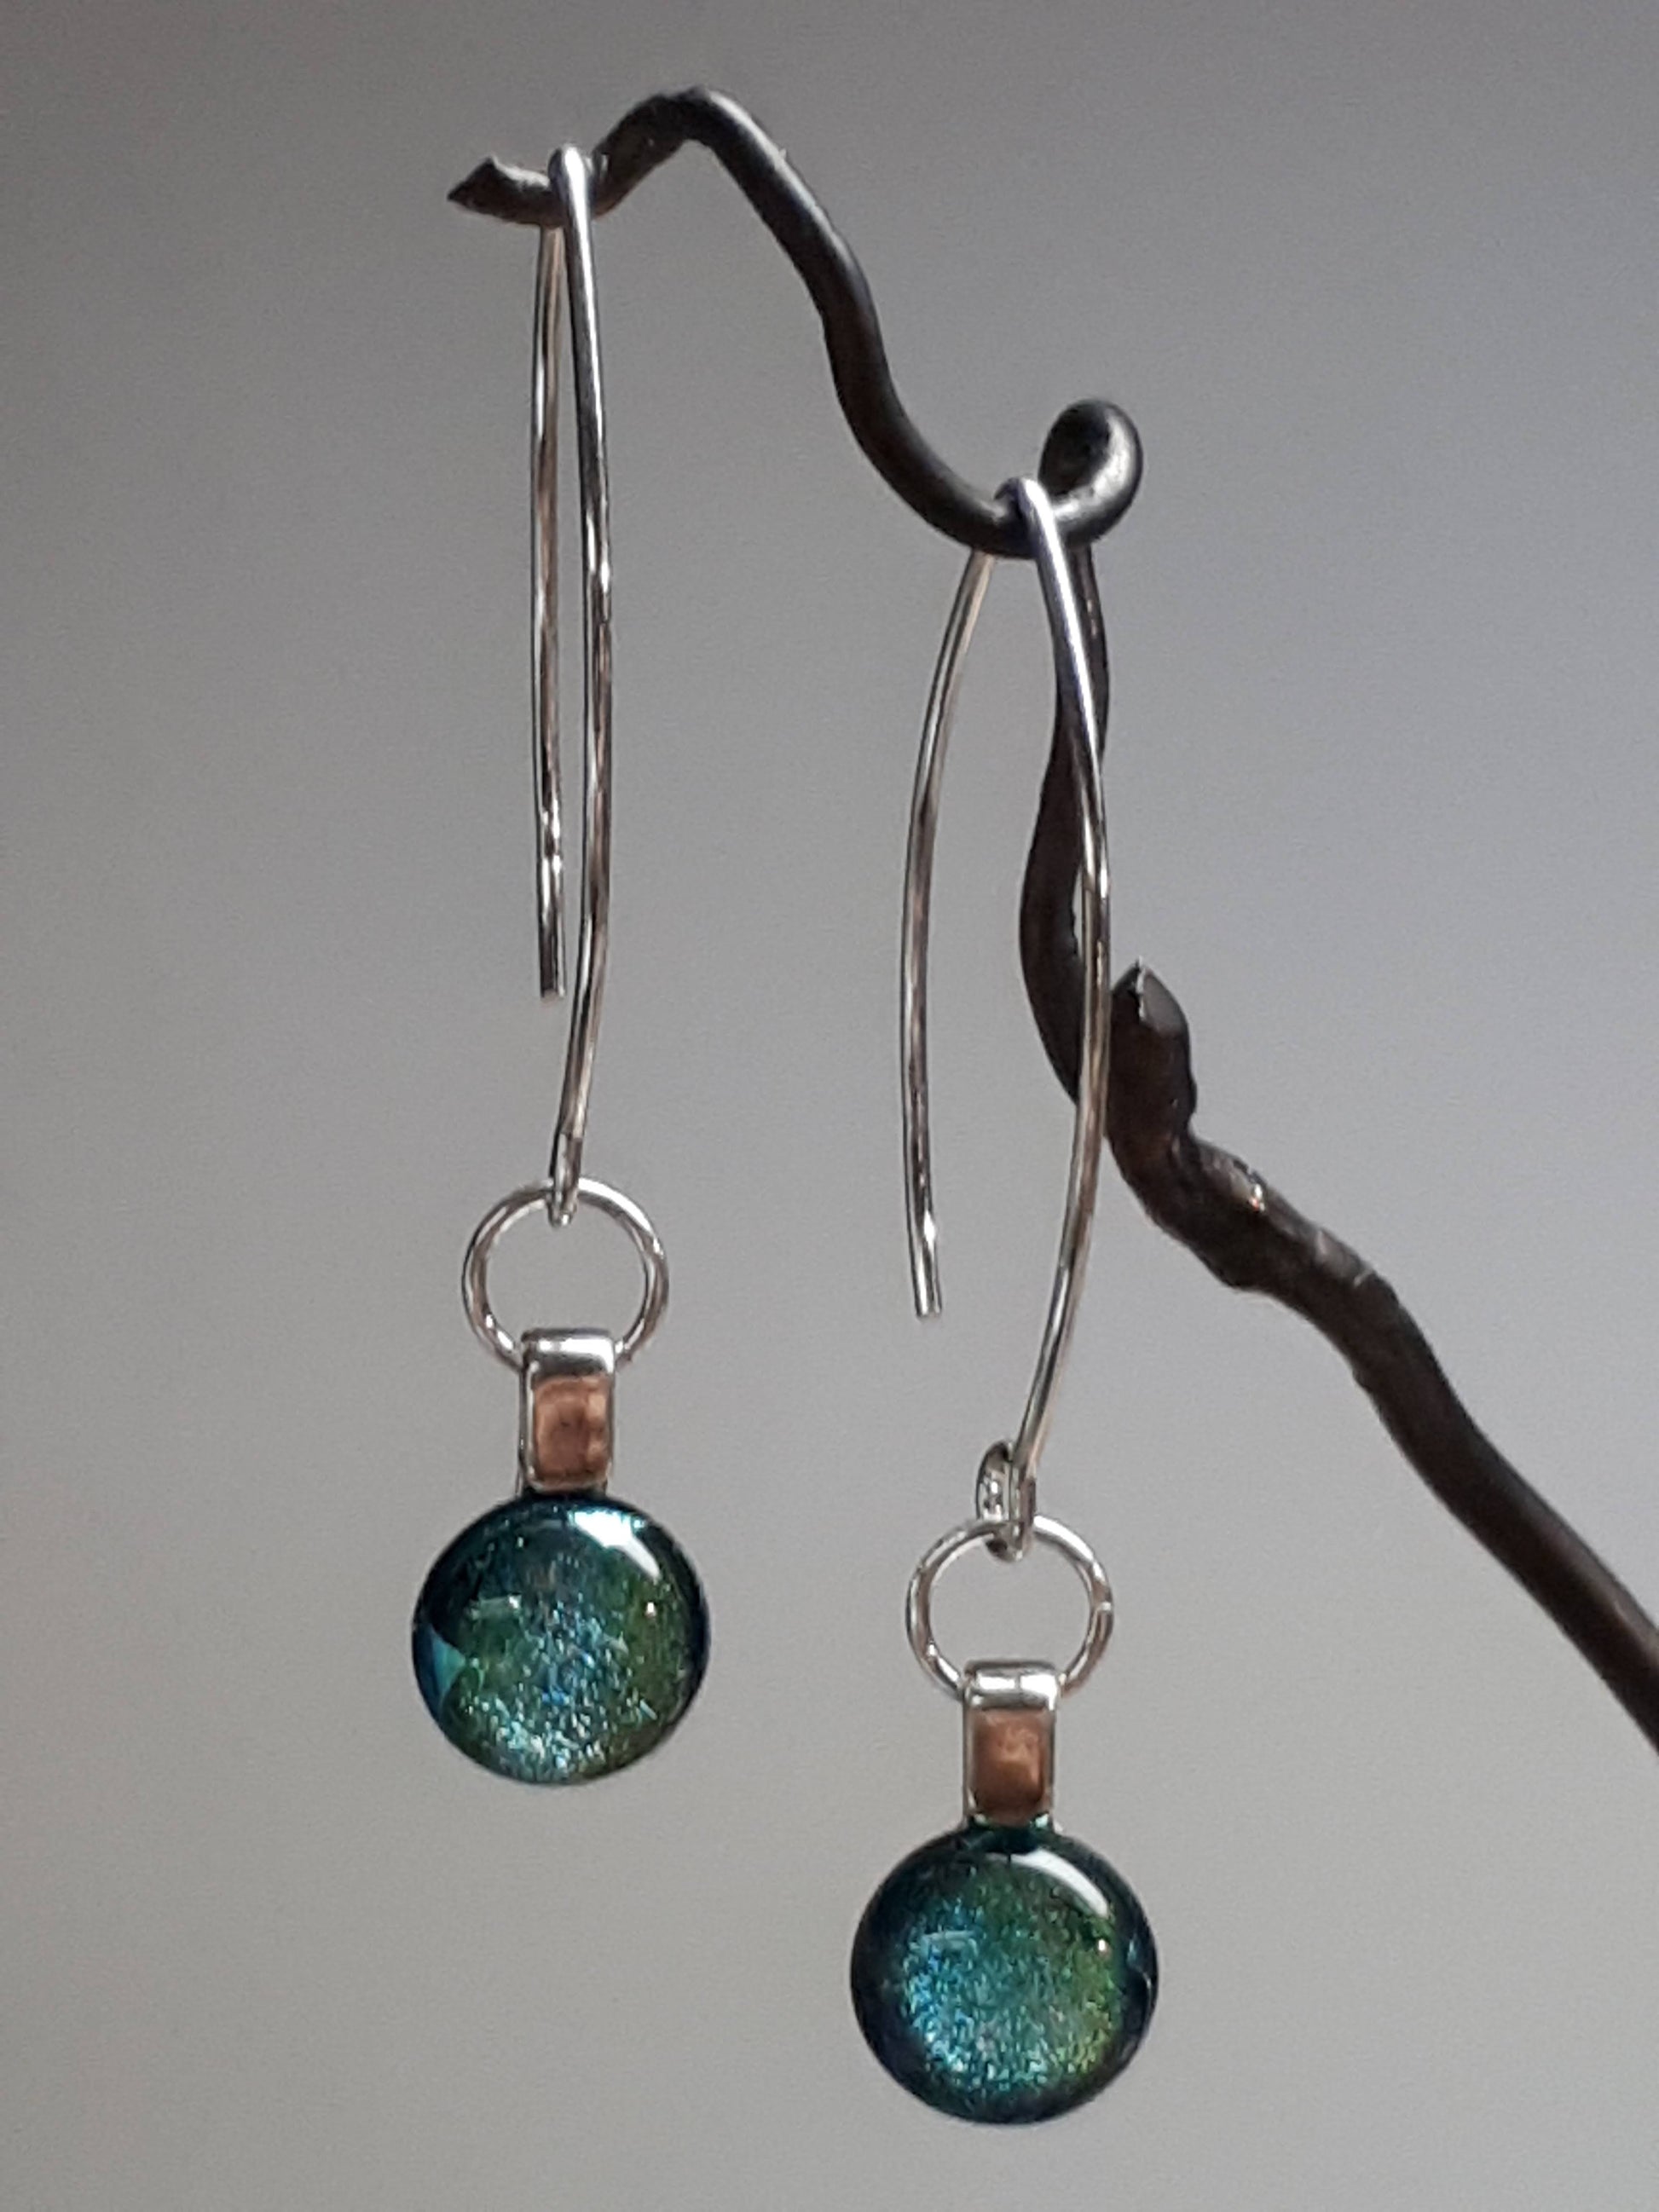 Beautiful handmade glass jewelry - lightweight earrings